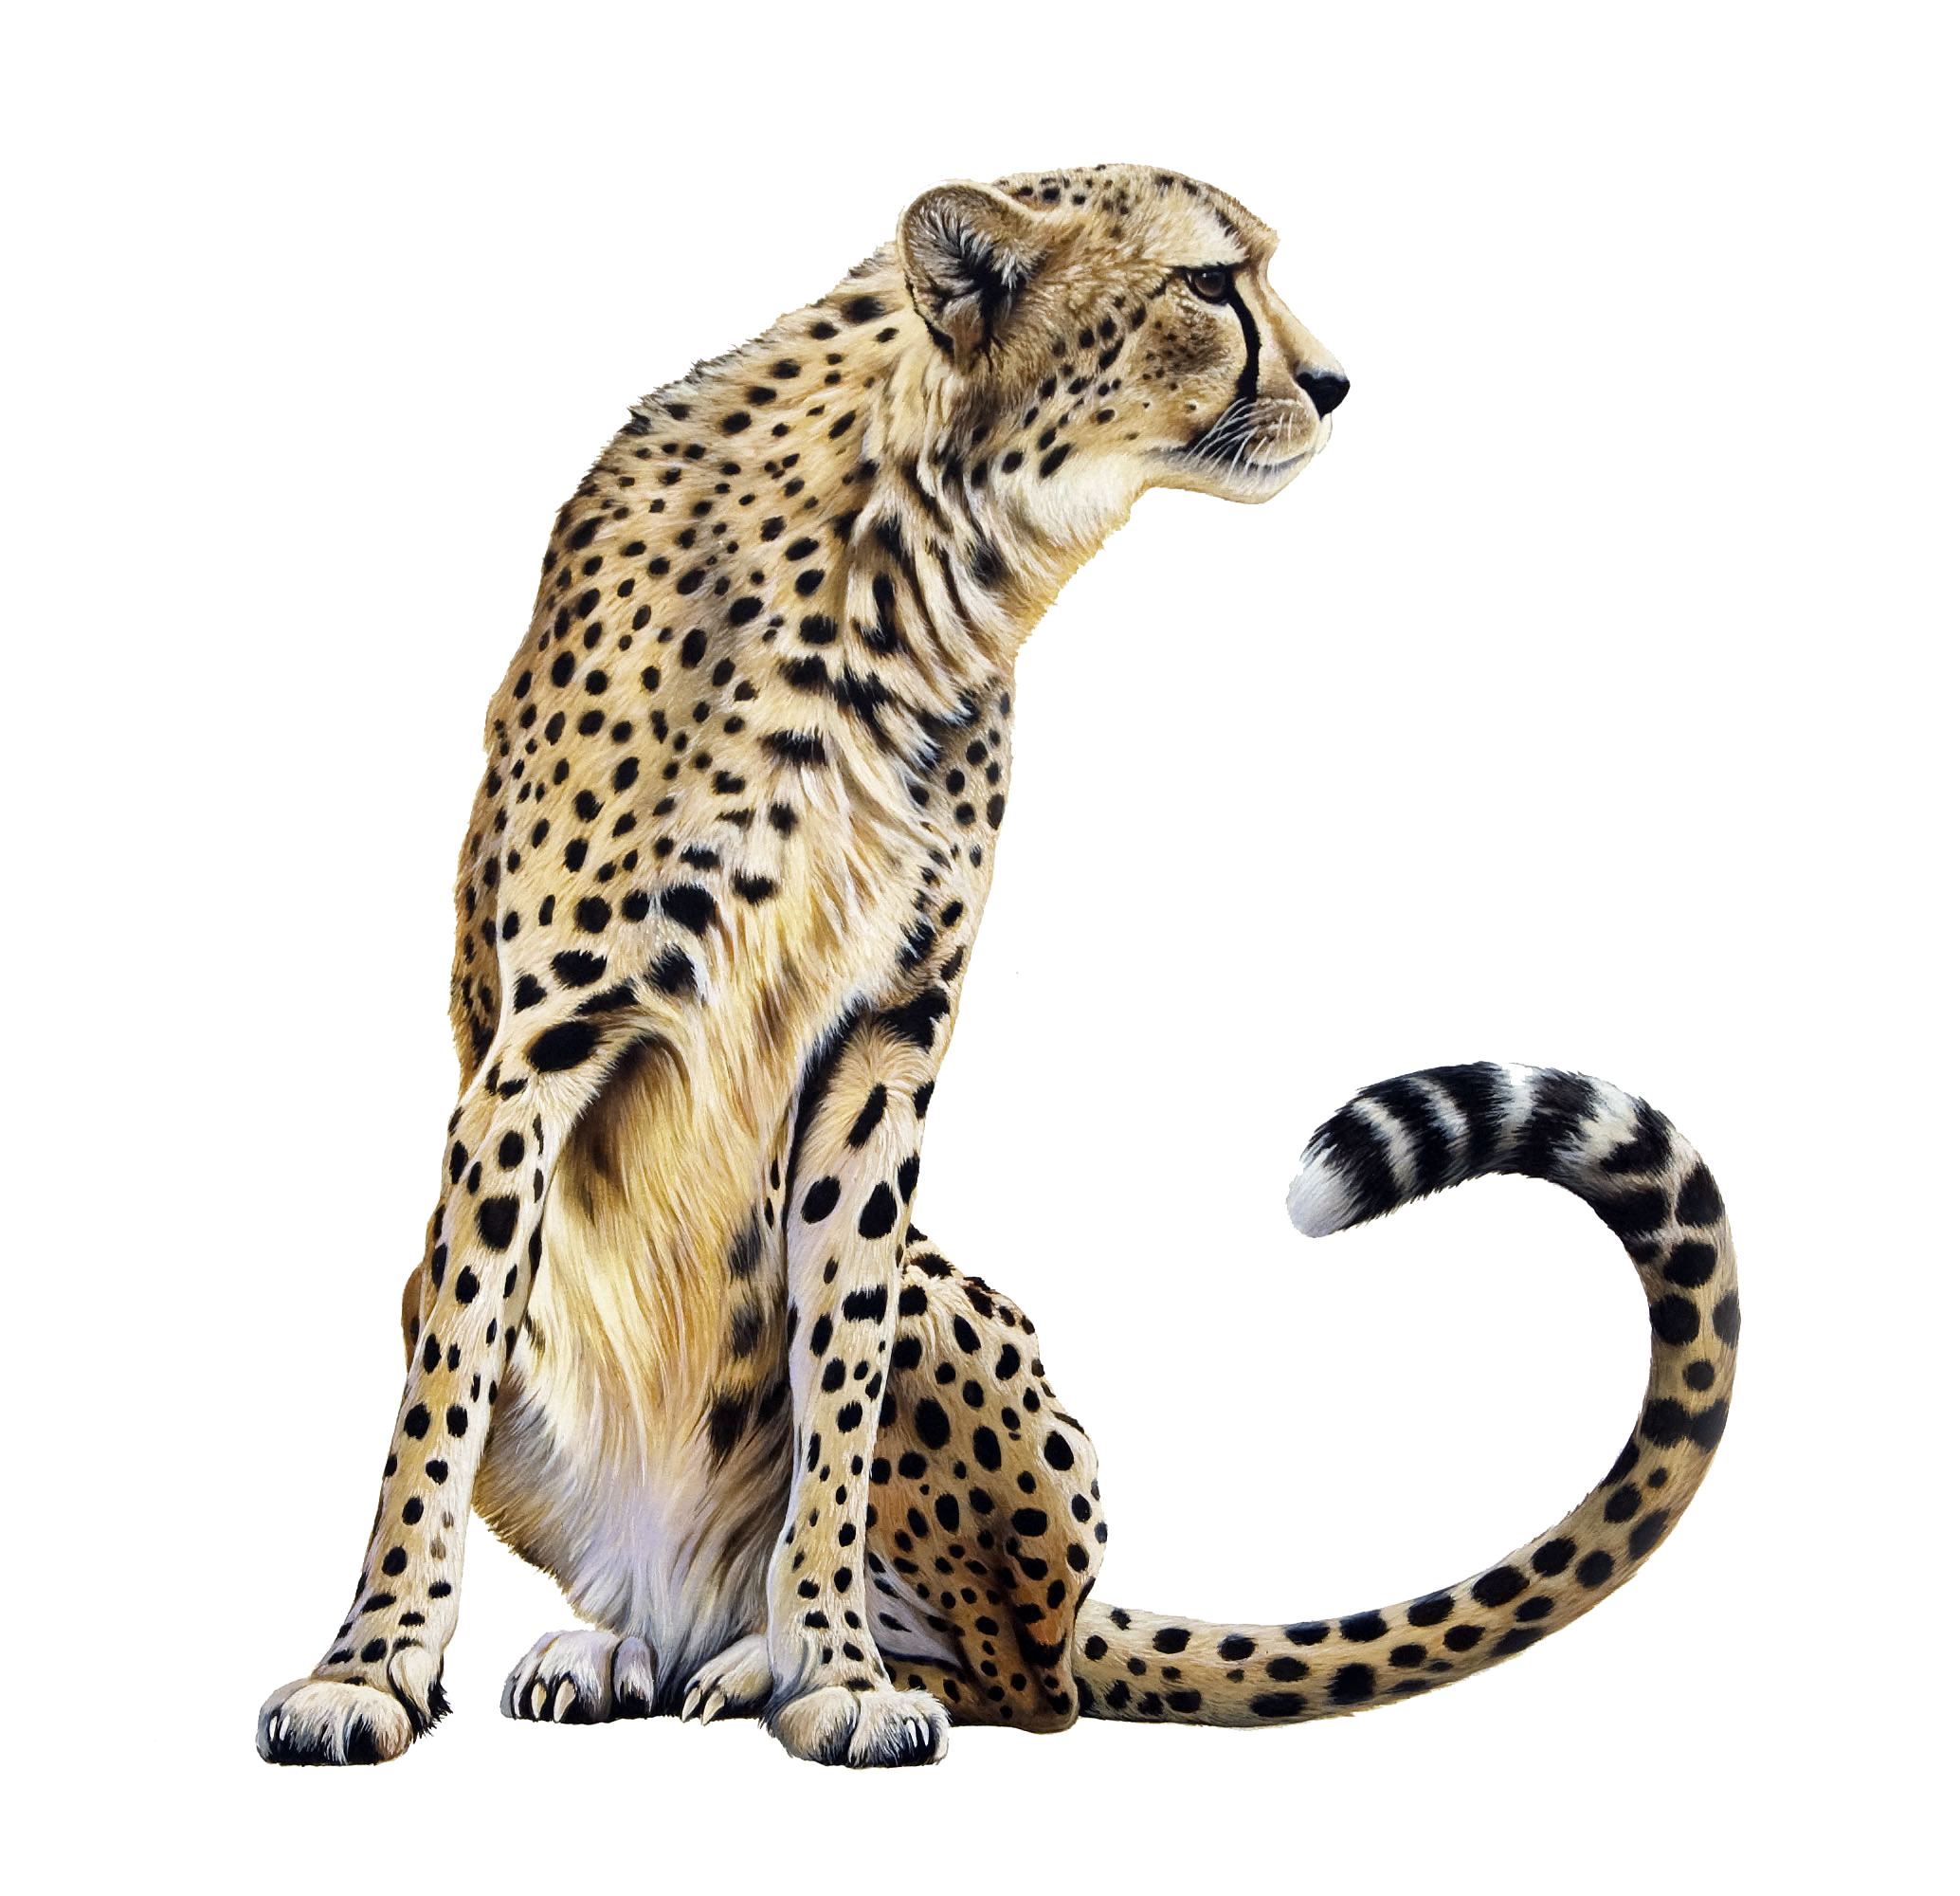 Cheetah Png Transparent - Cheetah, Transparent background PNG HD thumbnail